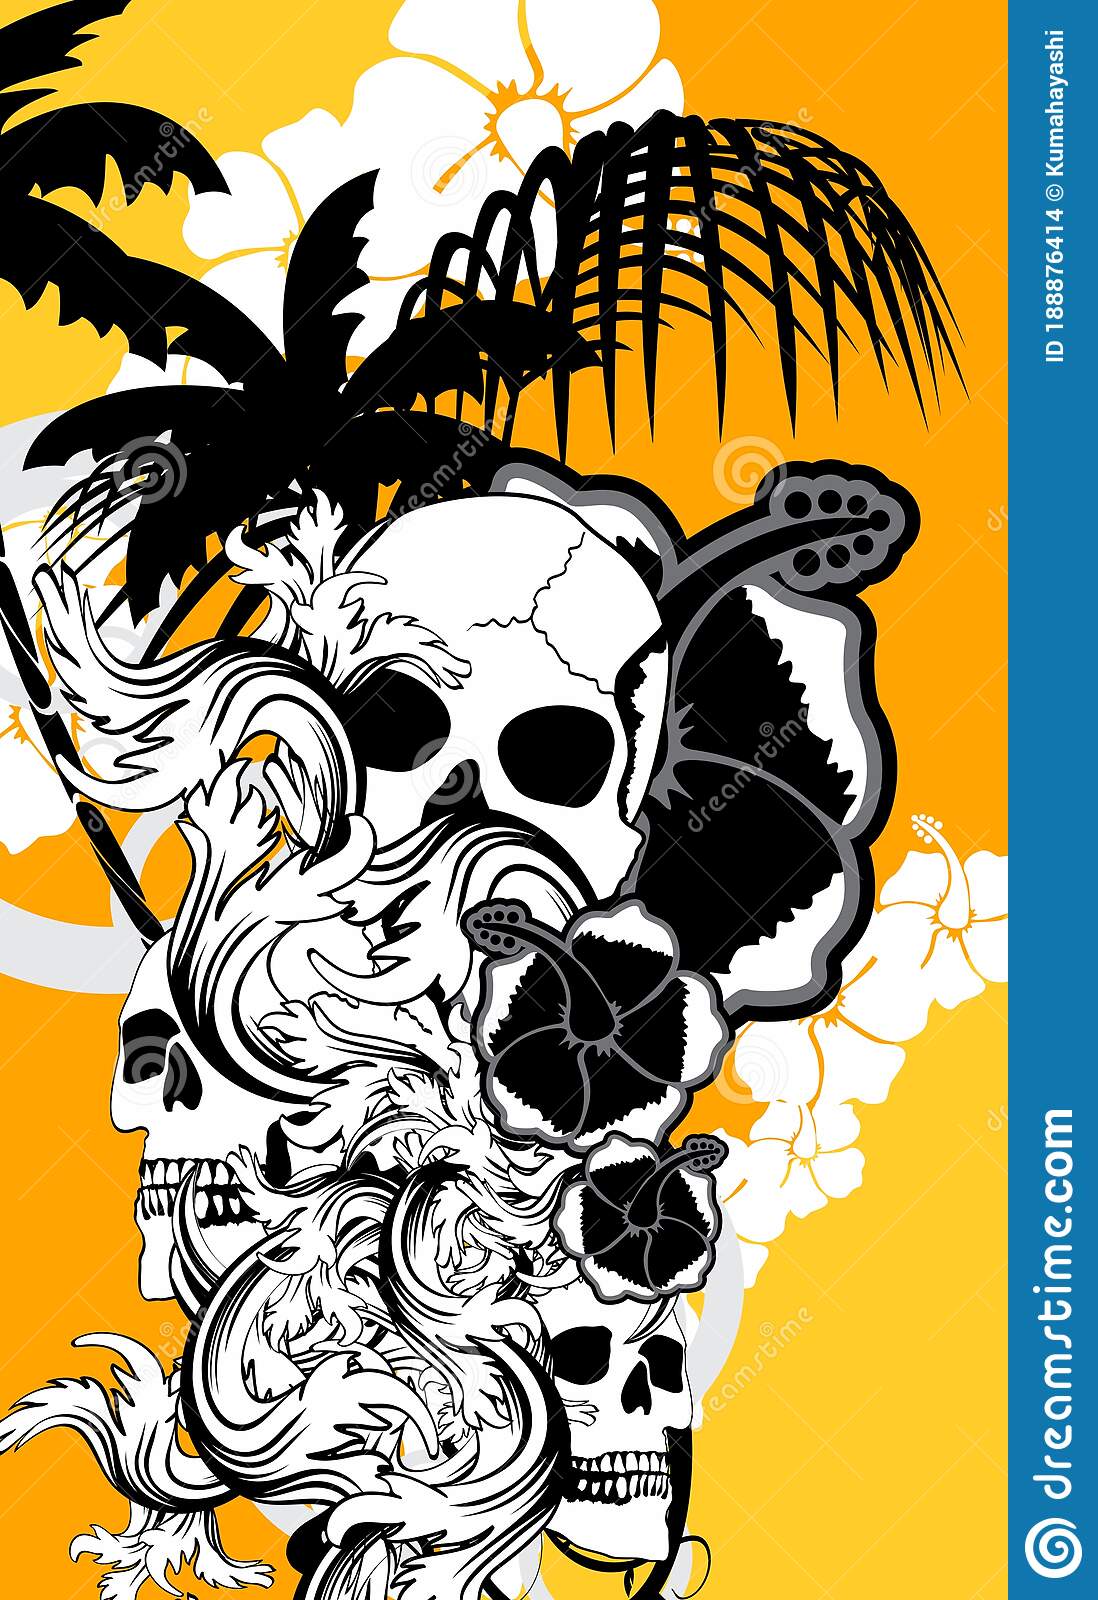 Hawaii skull graffiti tattoo wallpaper background stock vector